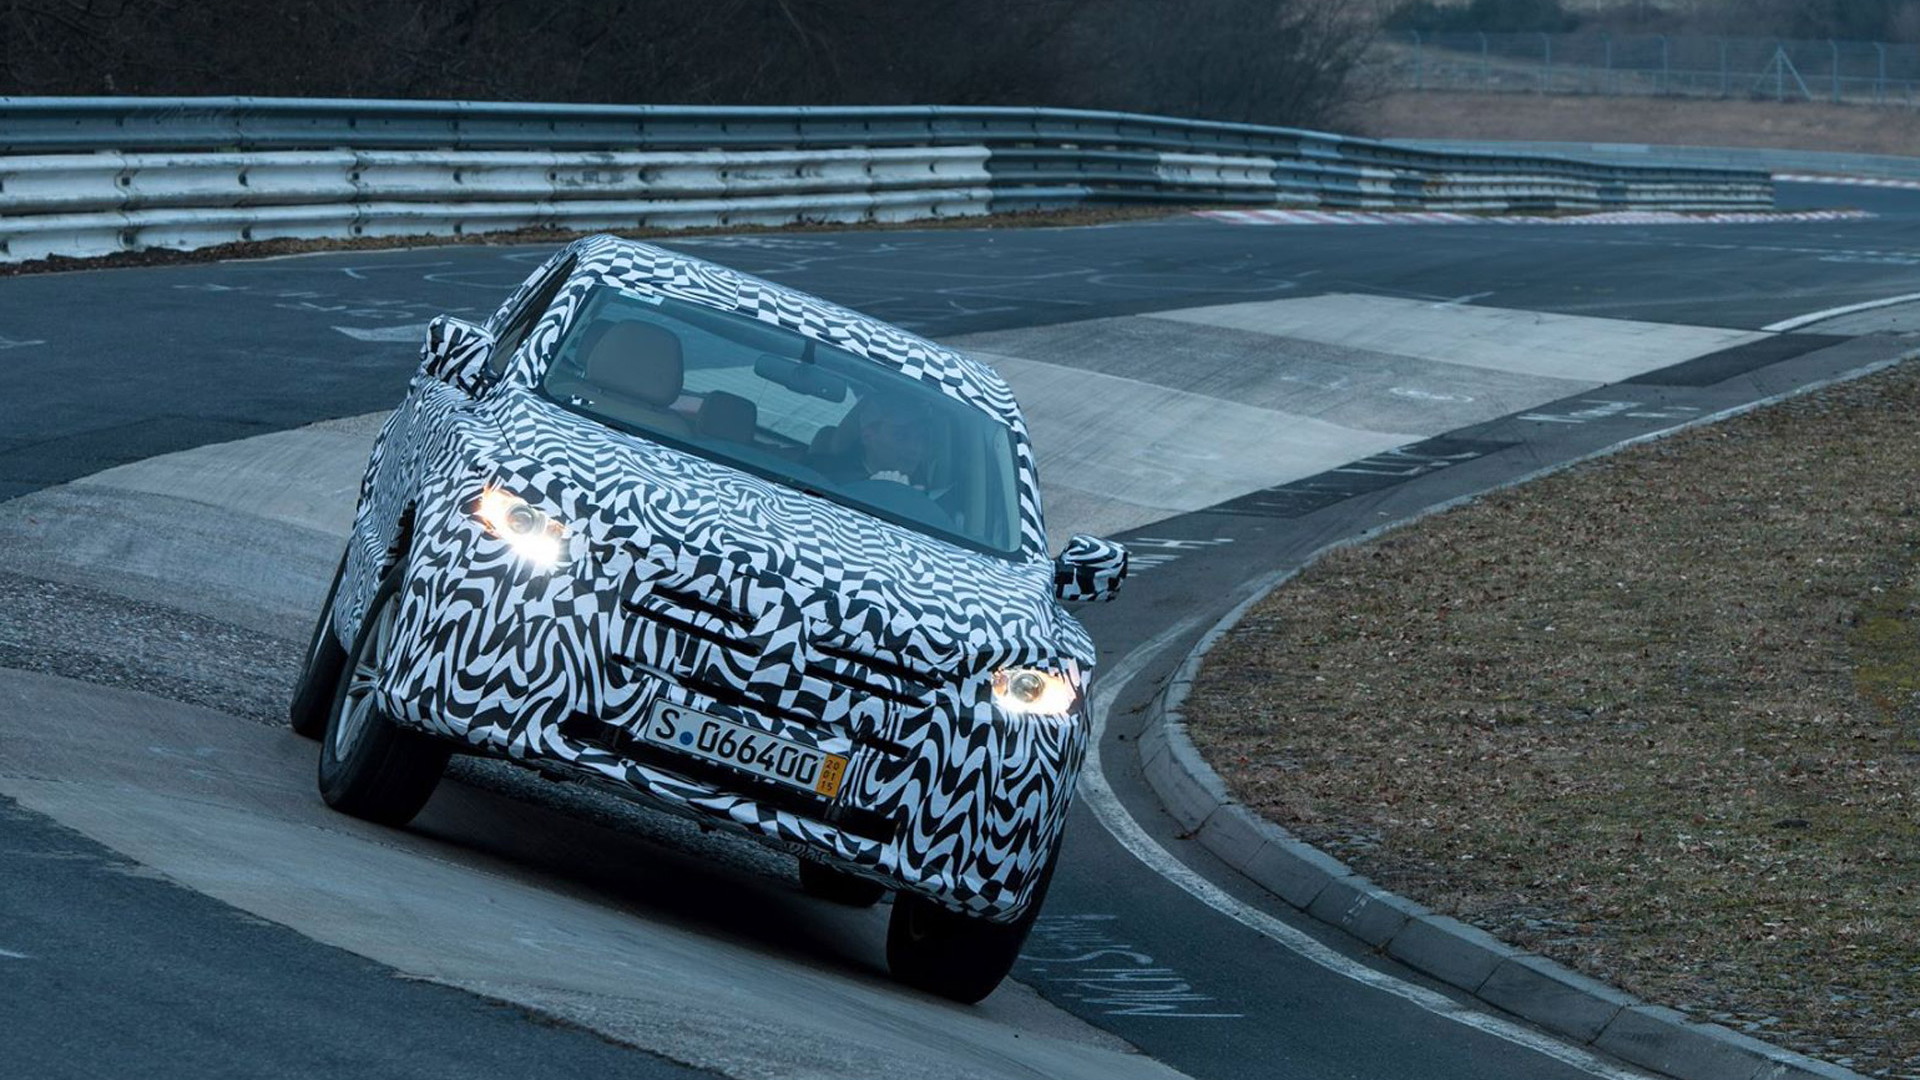 Teaser for new Borgward SUV debuting at 2015 Frankfurt Auto Show